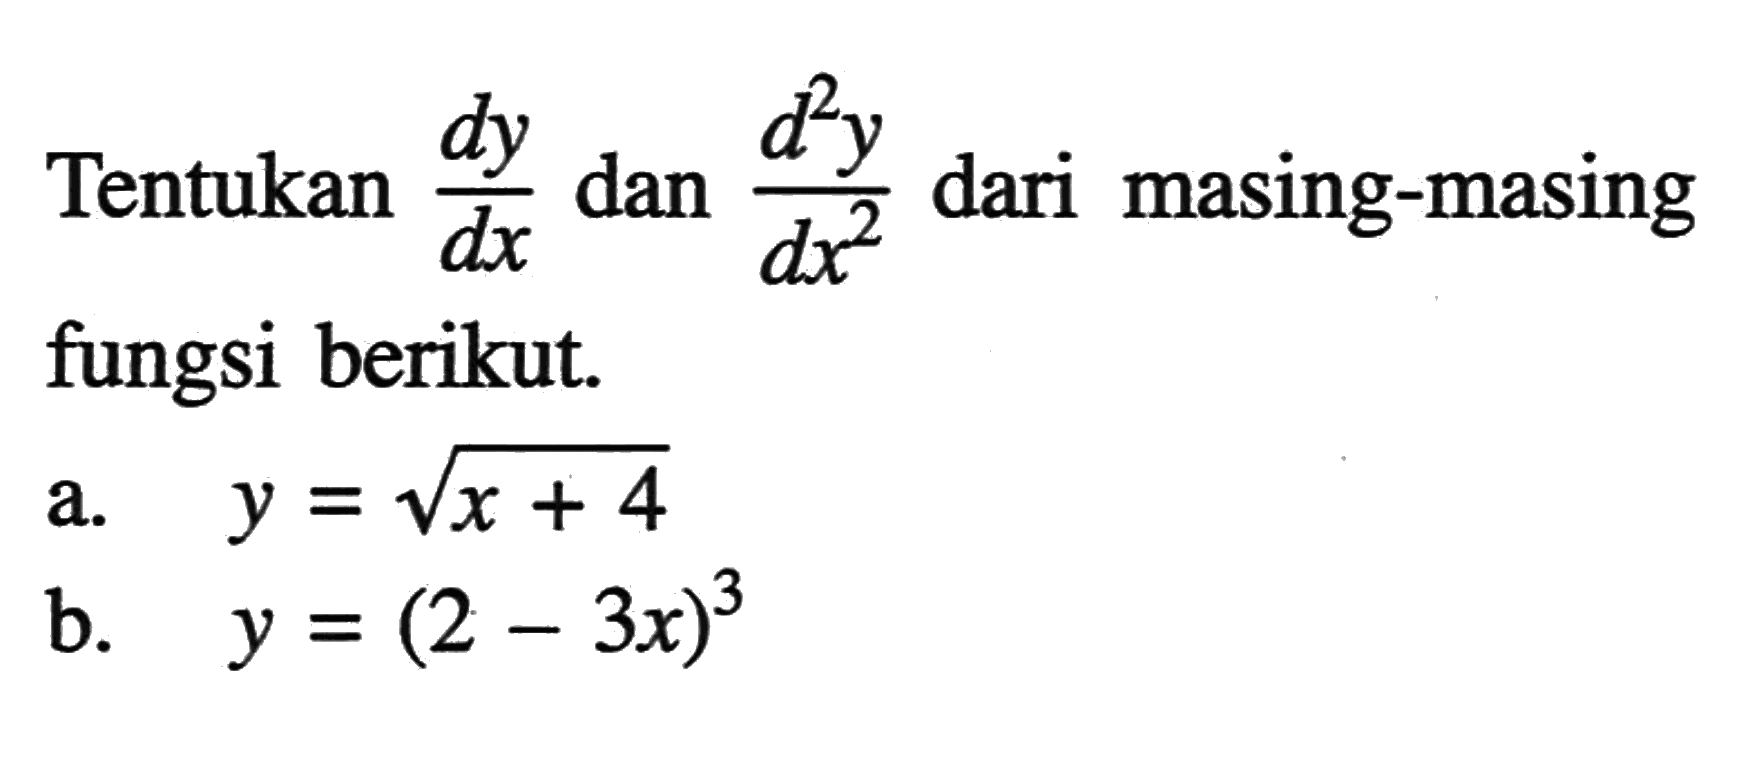 Tentukan dy/dx dan d^2y/dx^2 dari masing-masing fungsi berikut.a. y=akar(x+4)b. y=(2-3 x)^3